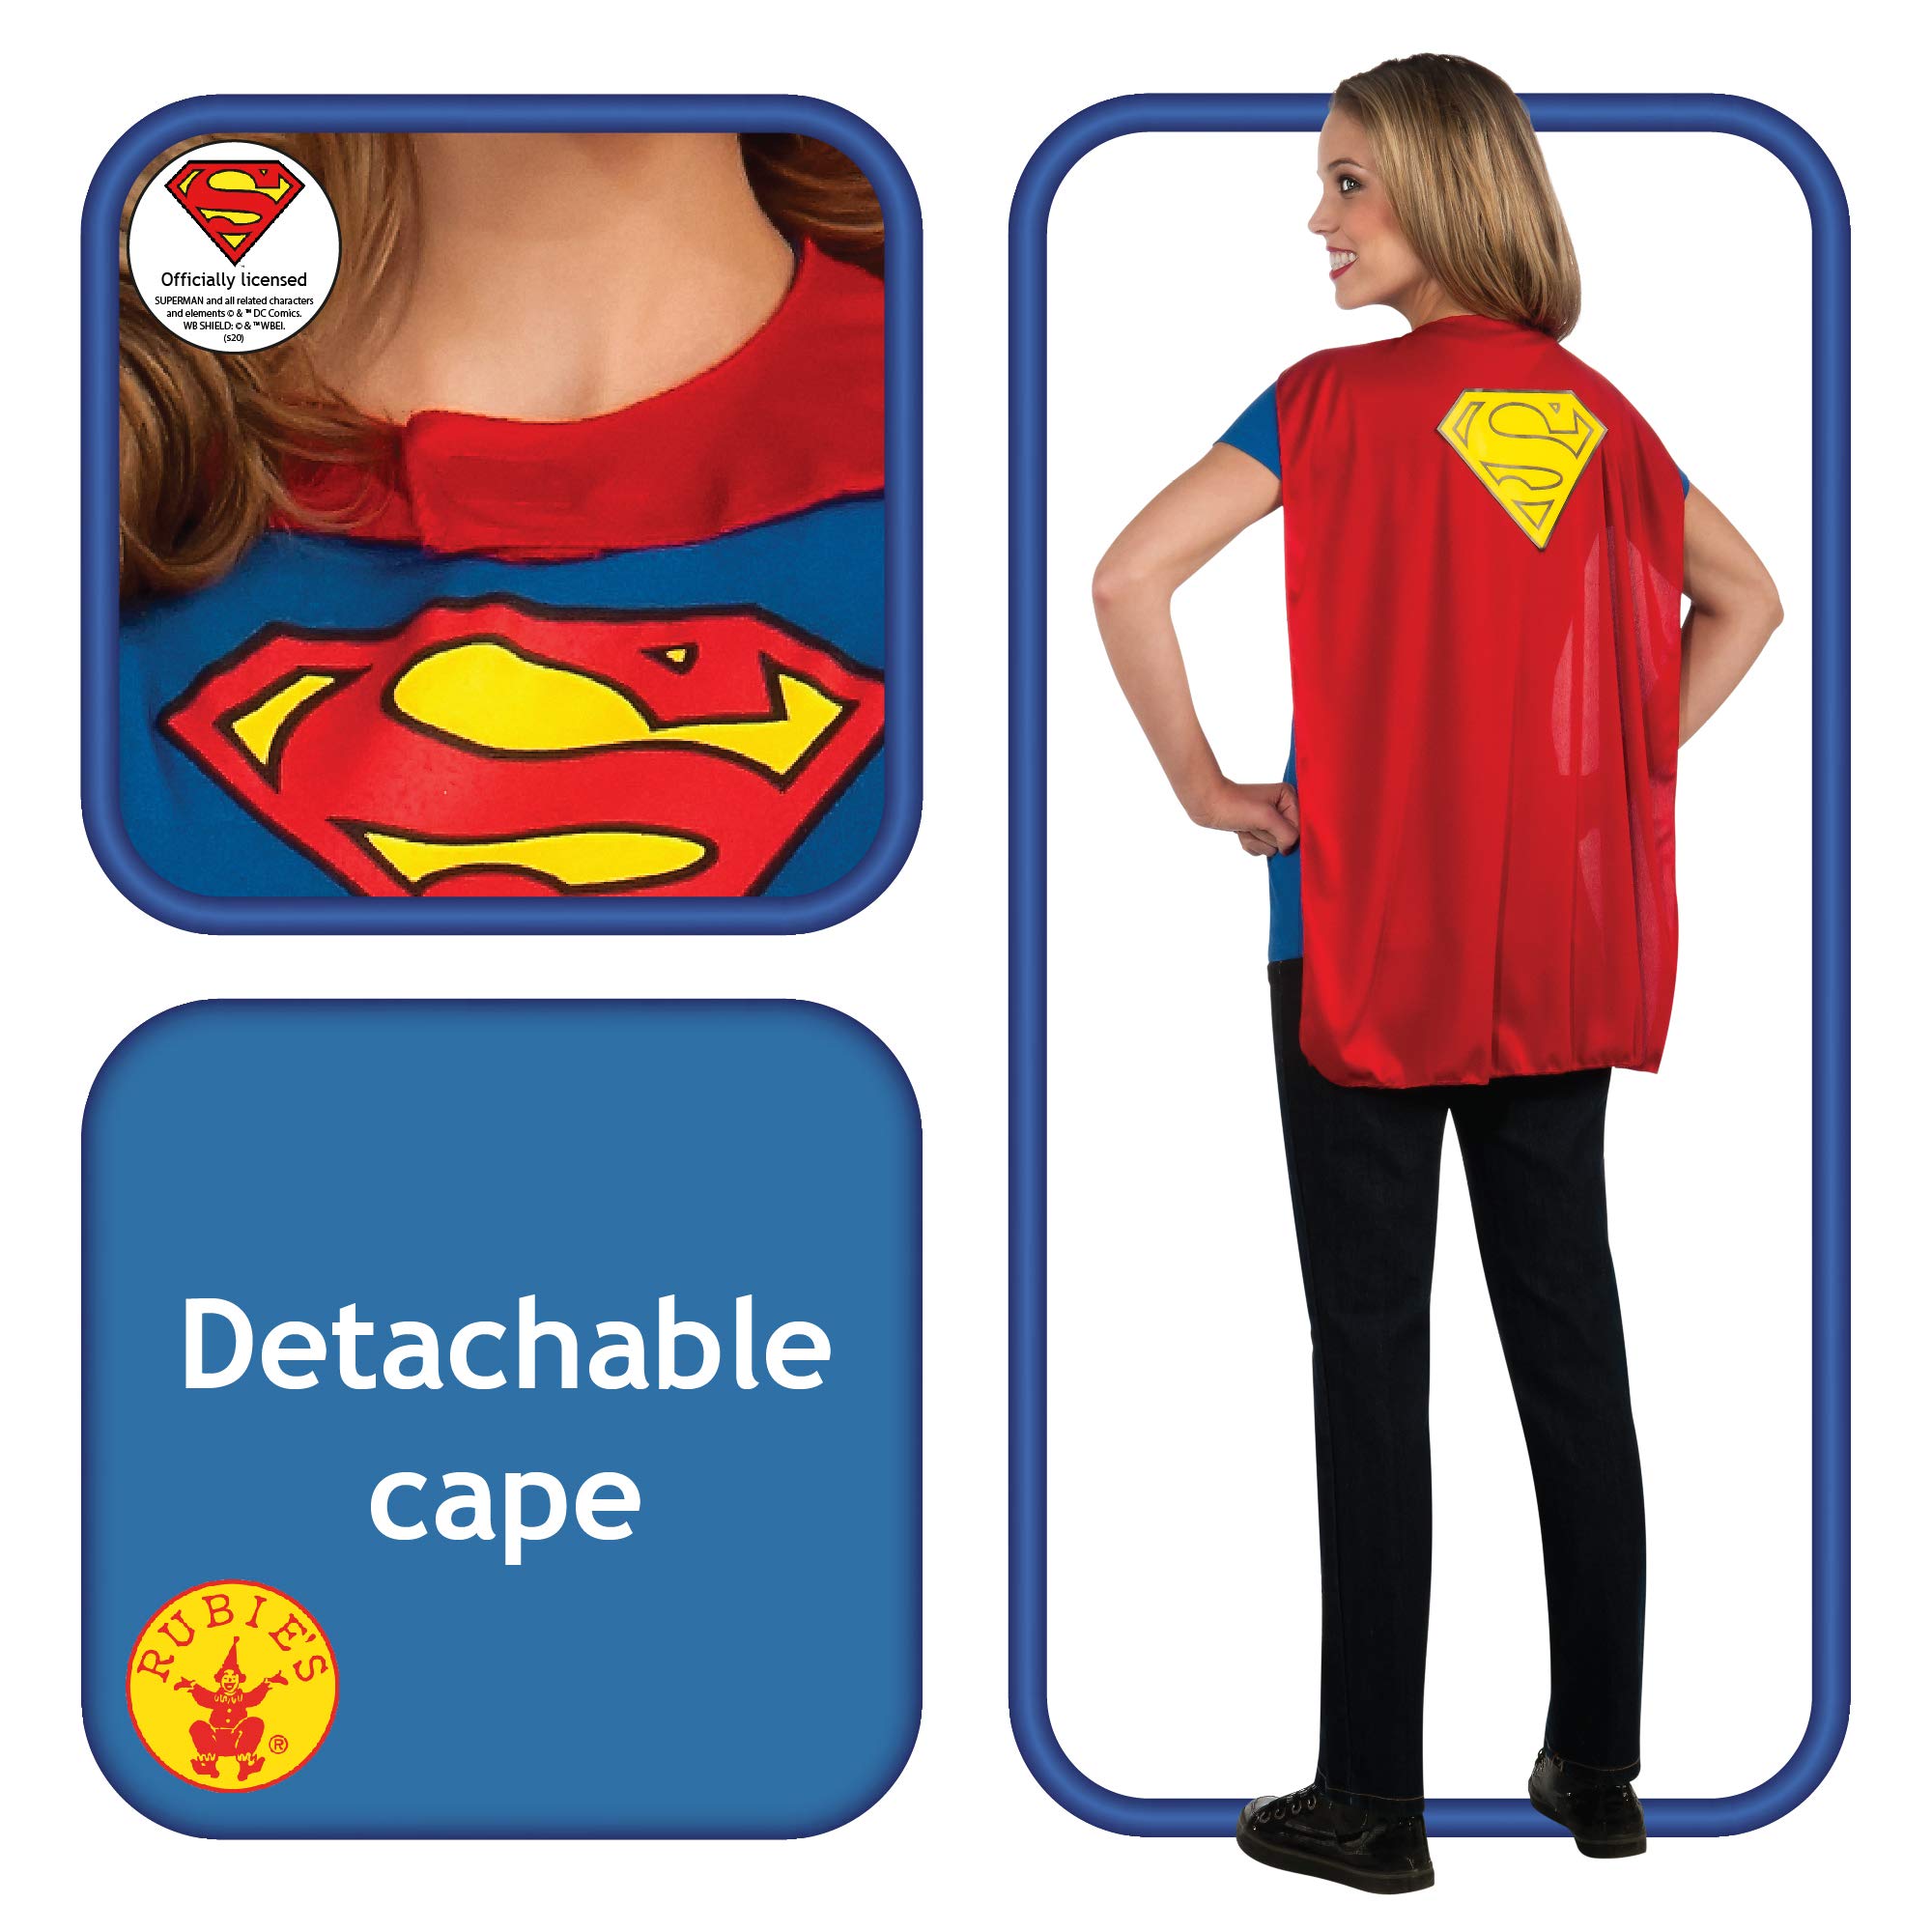 DC Comics Super-Girl T-Shirt With Cape Costume